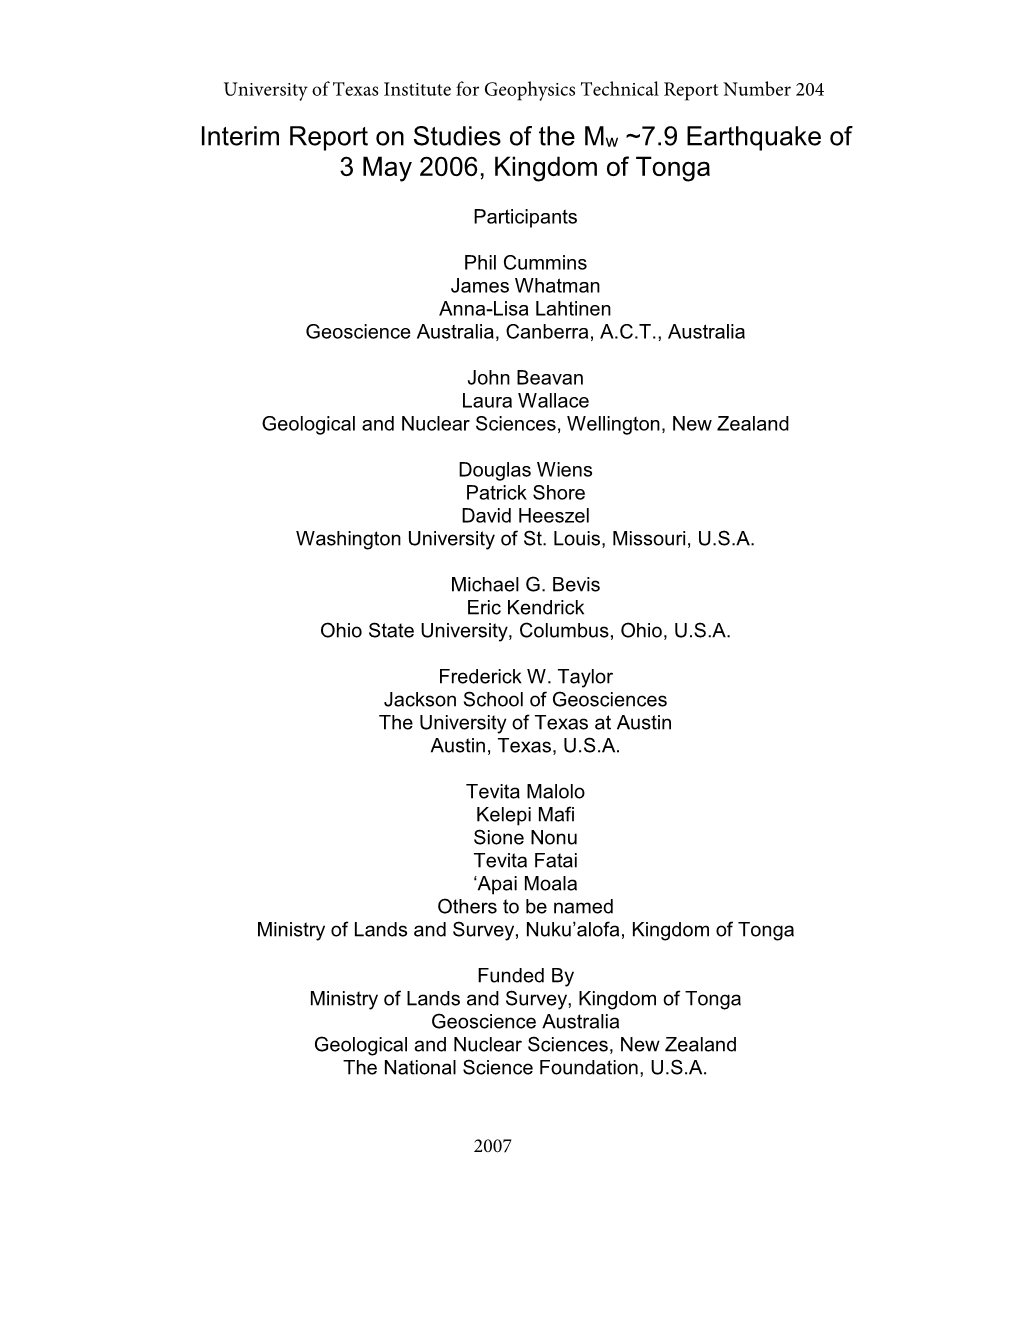 Interim Report on Studies of the 3 May 2006 Ha